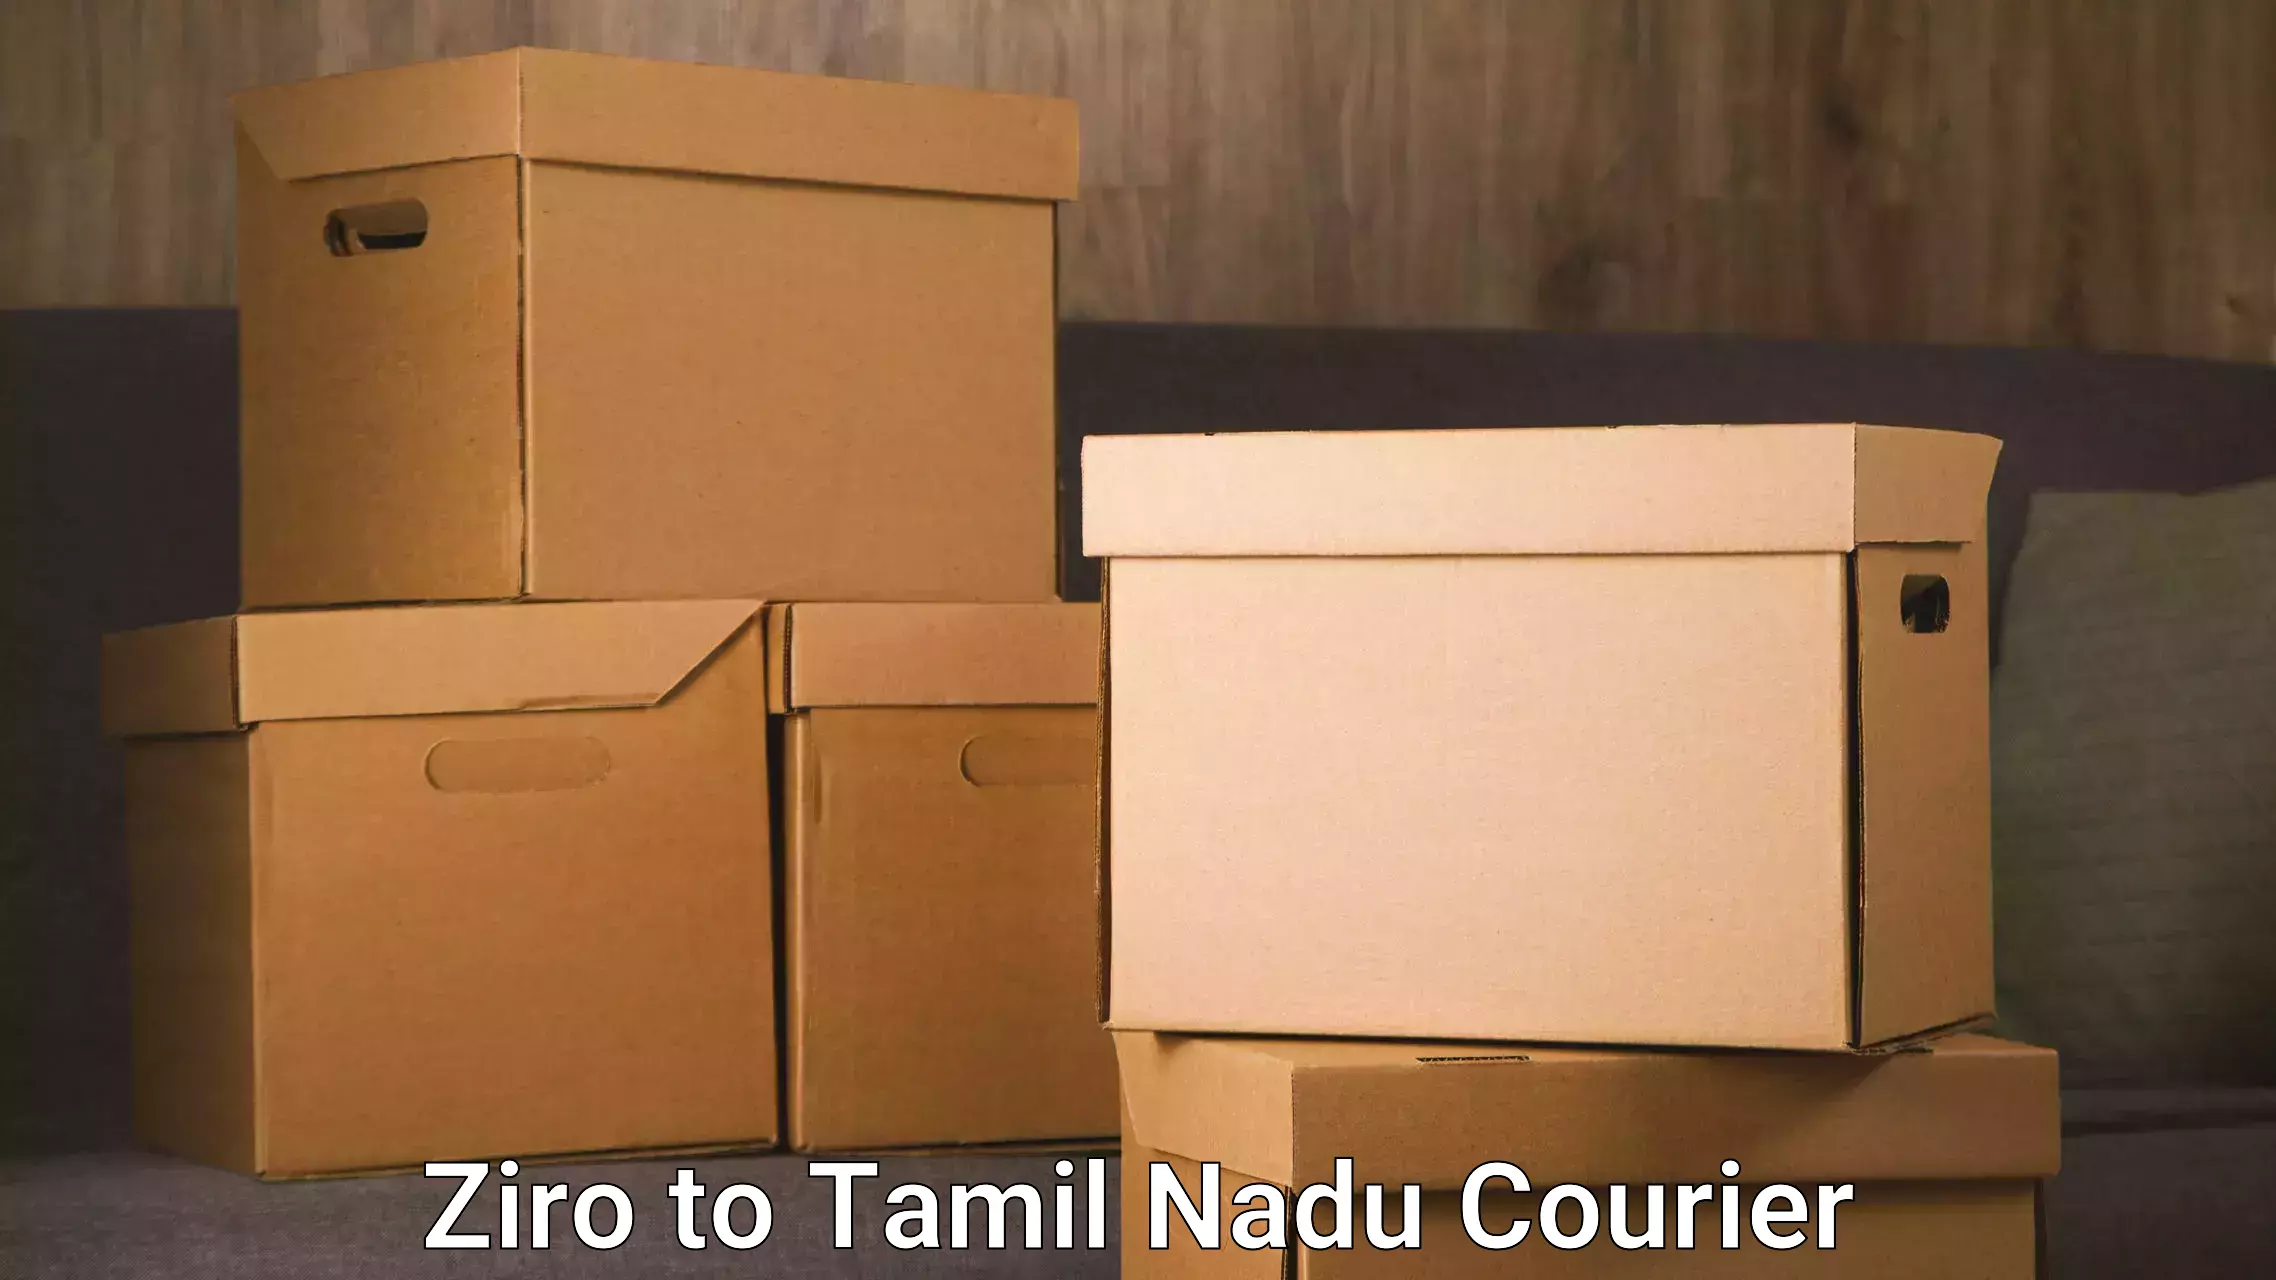 Express courier capabilities Ziro to Tamil Nadu